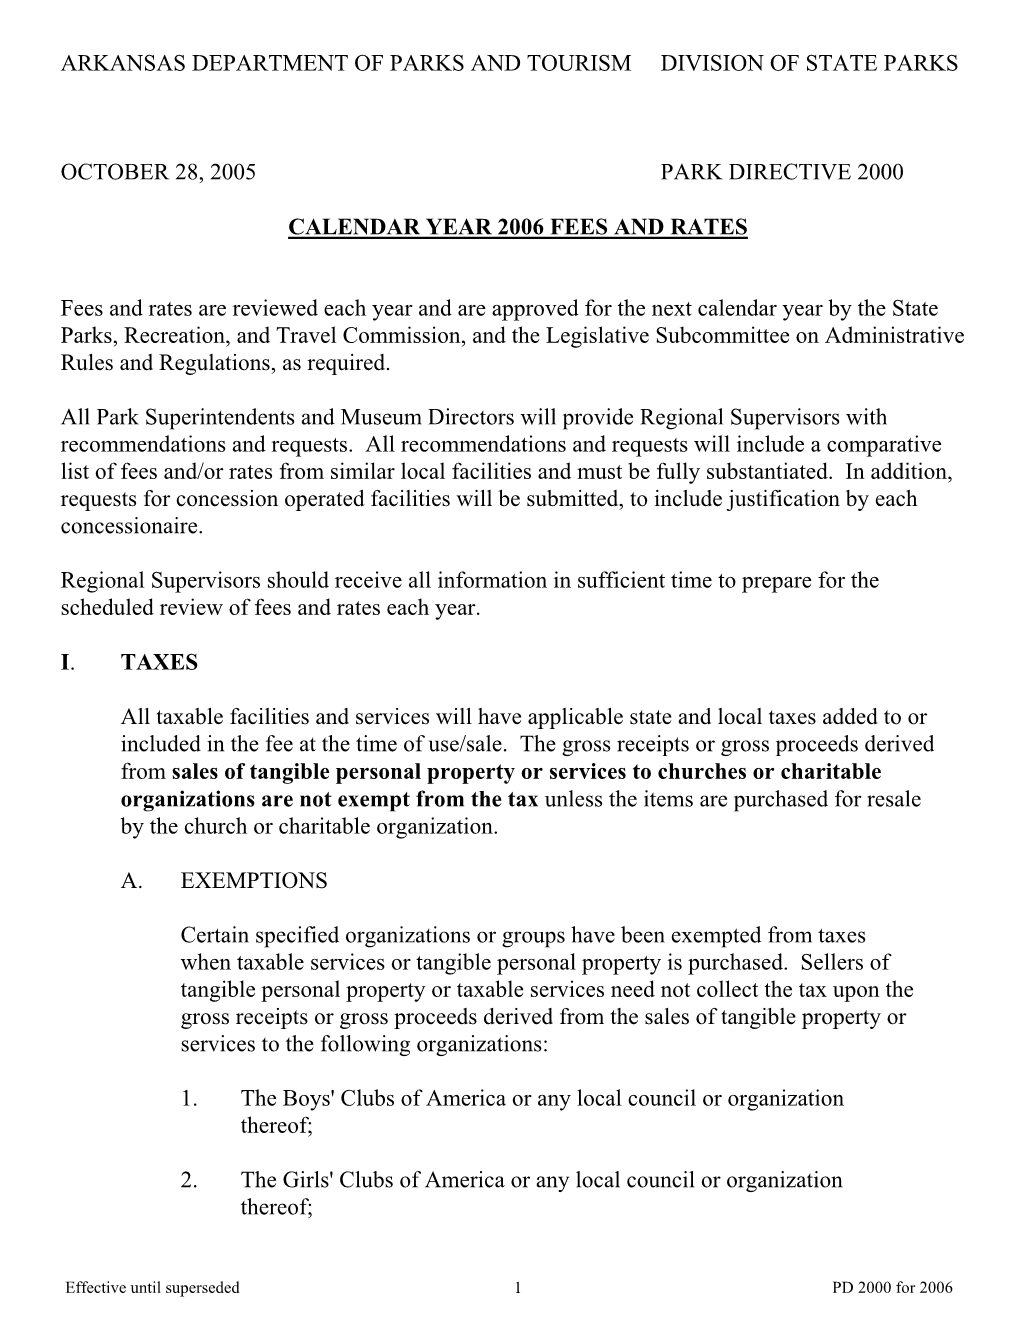 Park Directive 2000: Calendar Year 2006